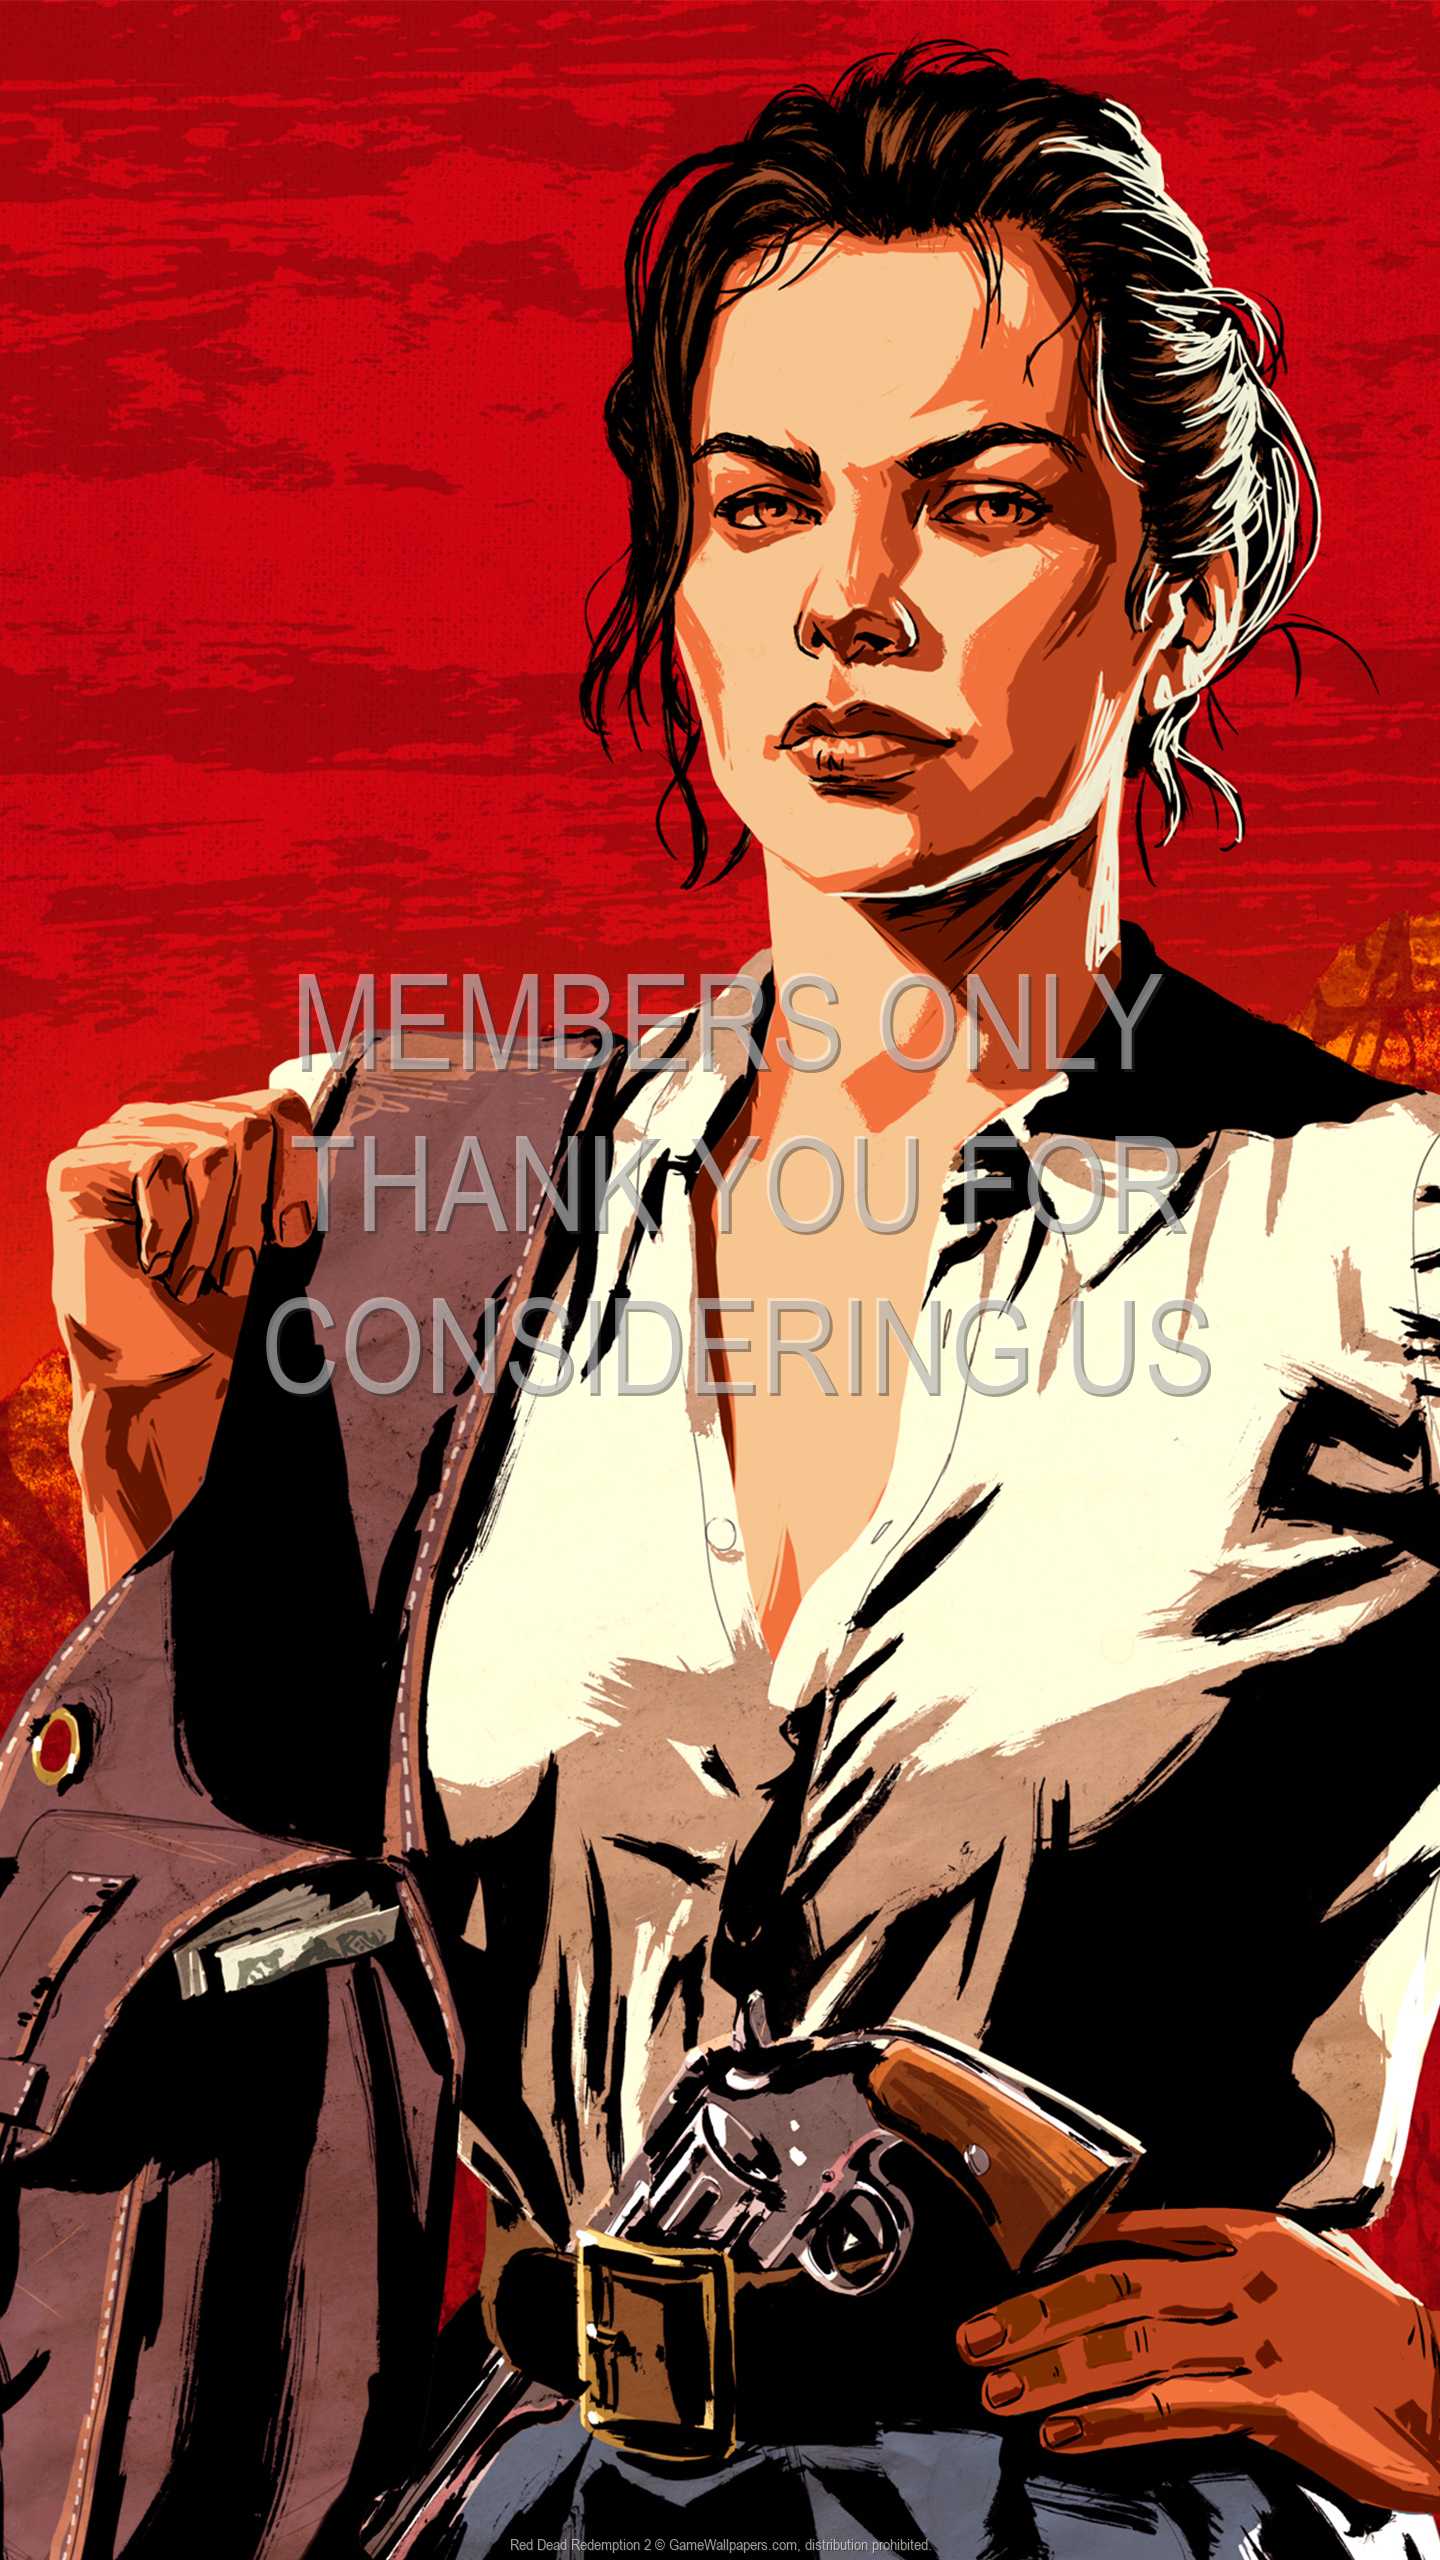 Red Dead Redemption 2 1440p Vertical Mobile wallpaper or background 02